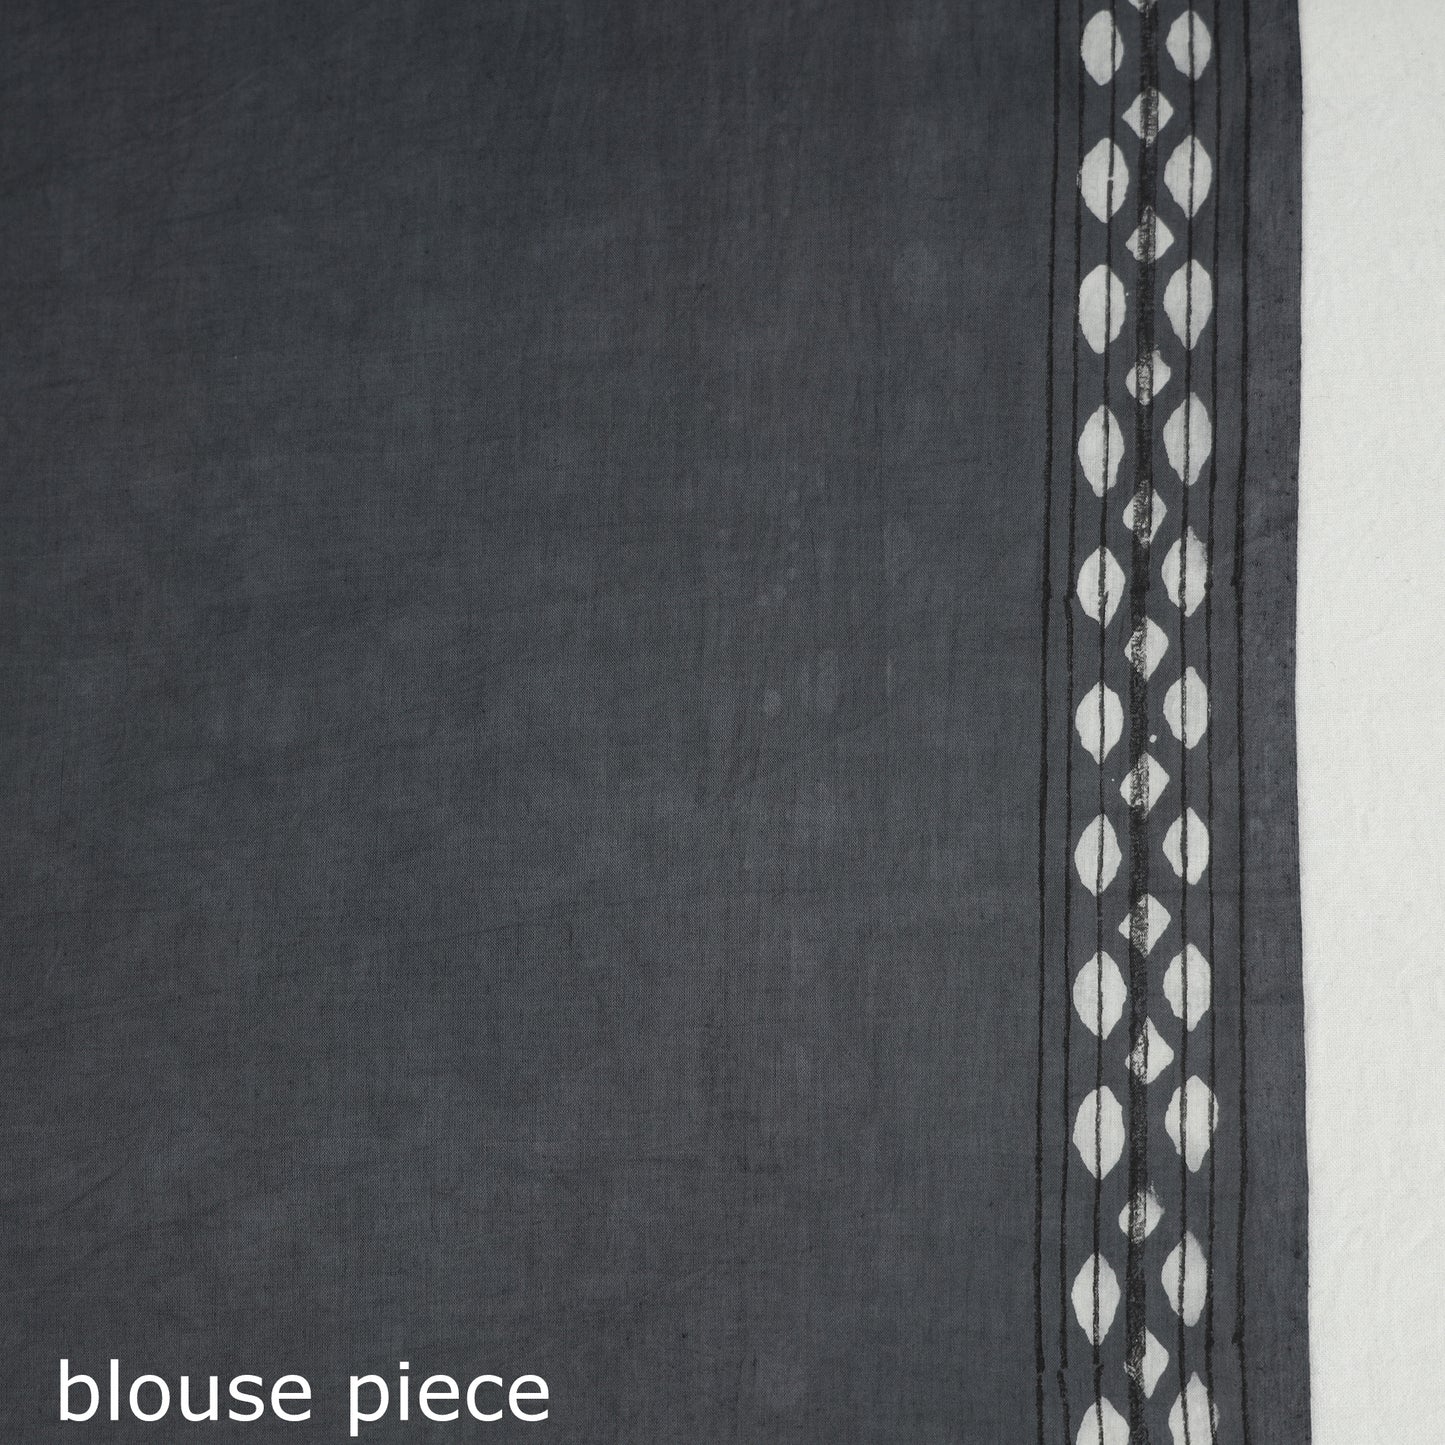 block printed saree